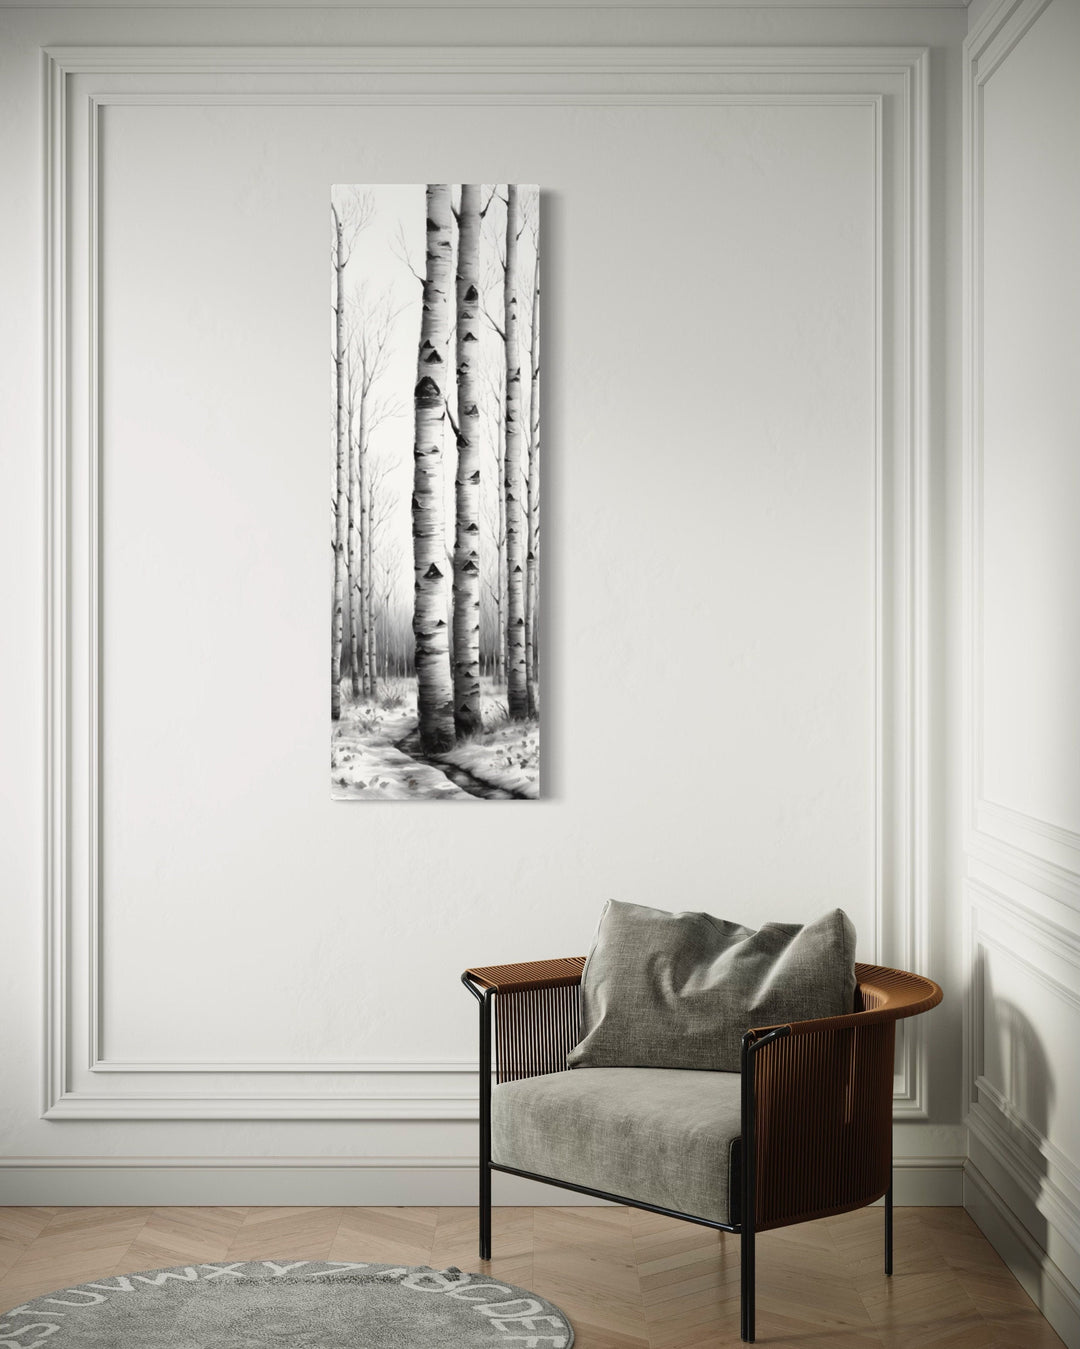 Tall Narrow Birch Trees Black White Vertical Wall Art behind armchair